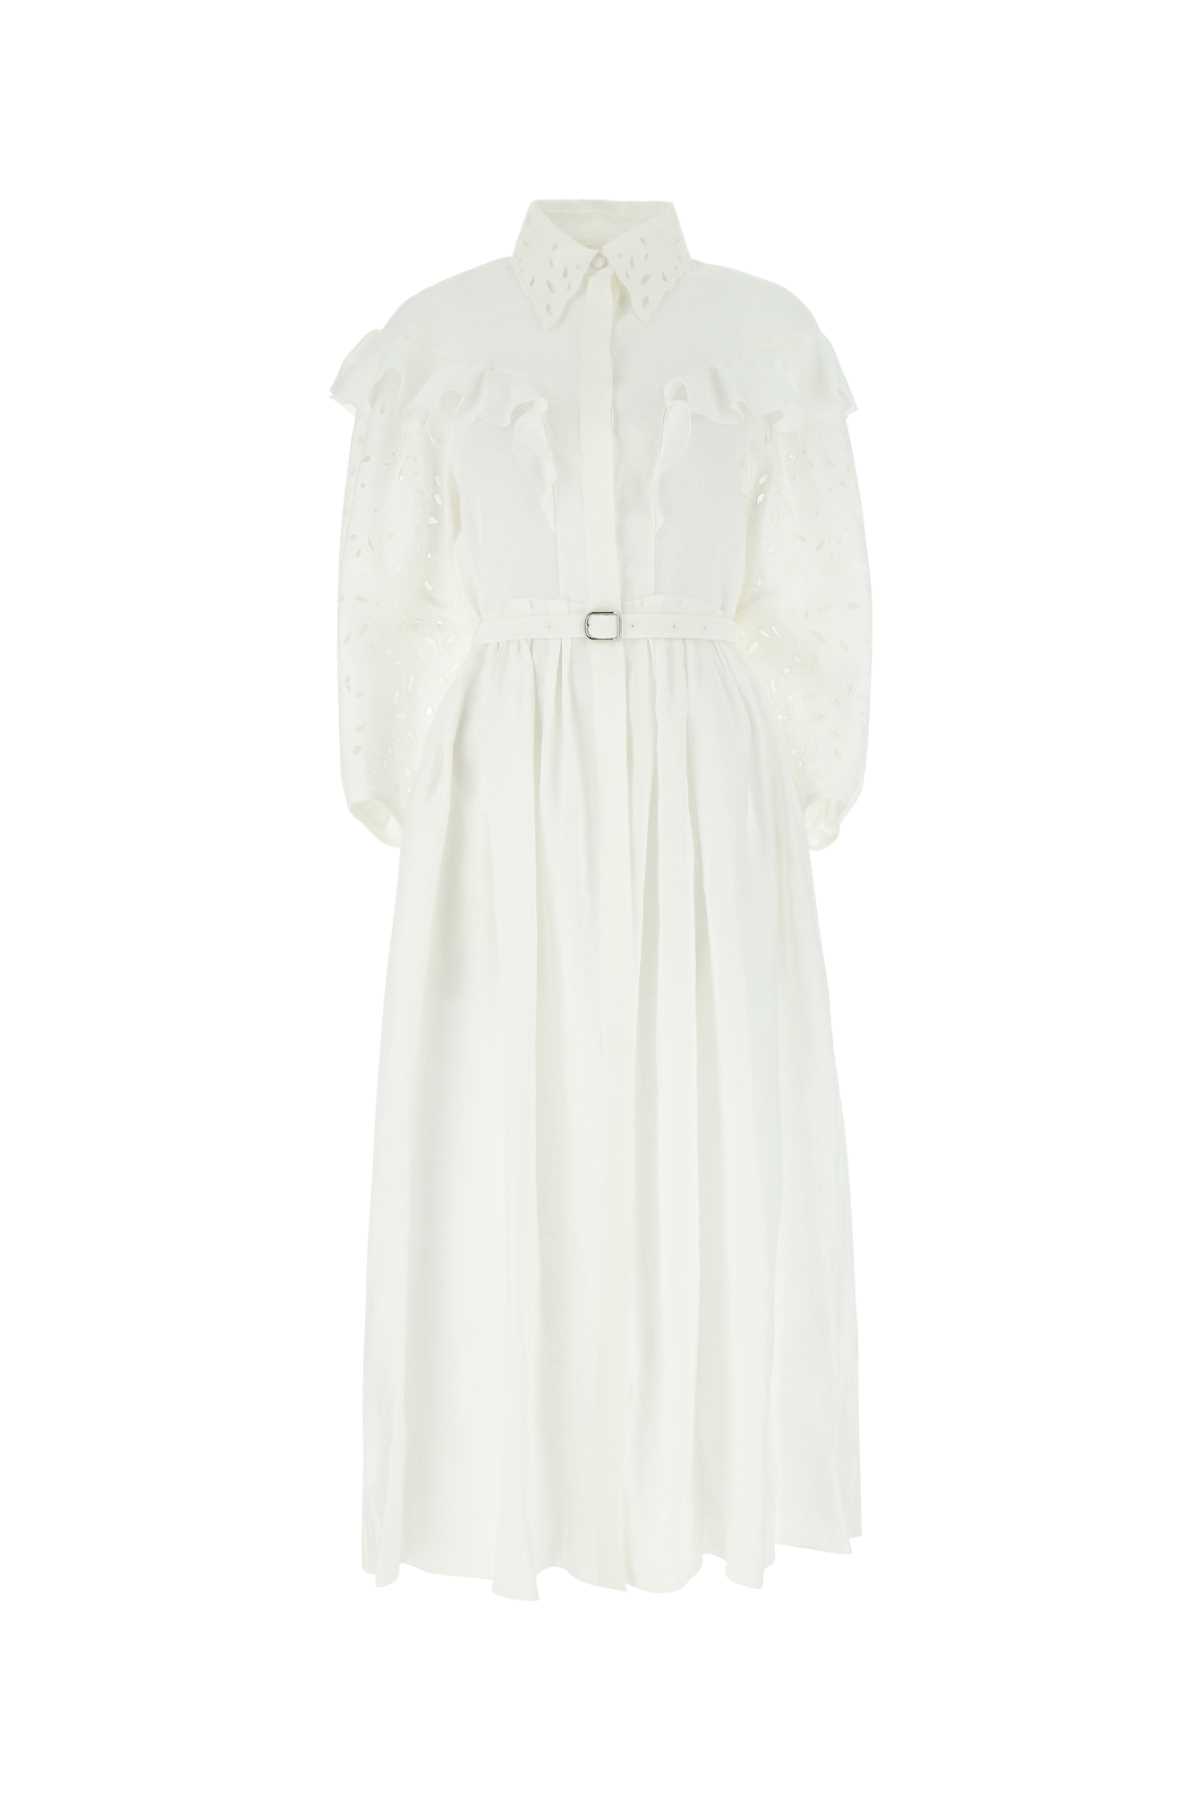 Chloé White Linen Dress